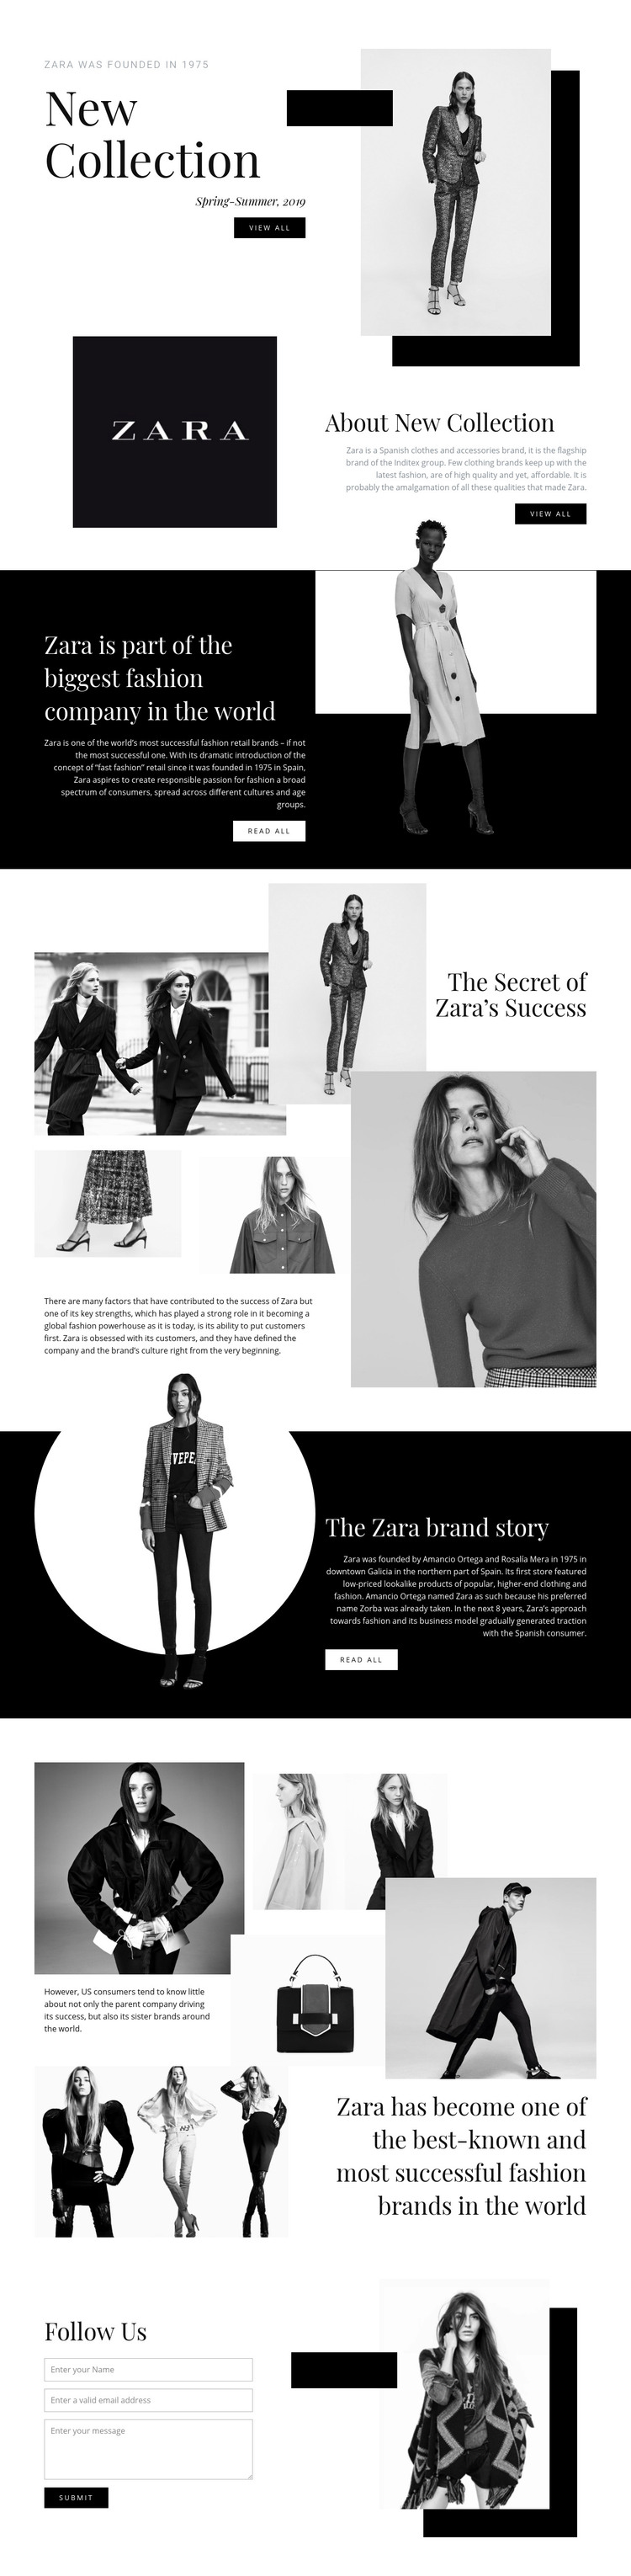 Zara collection Homepage Design